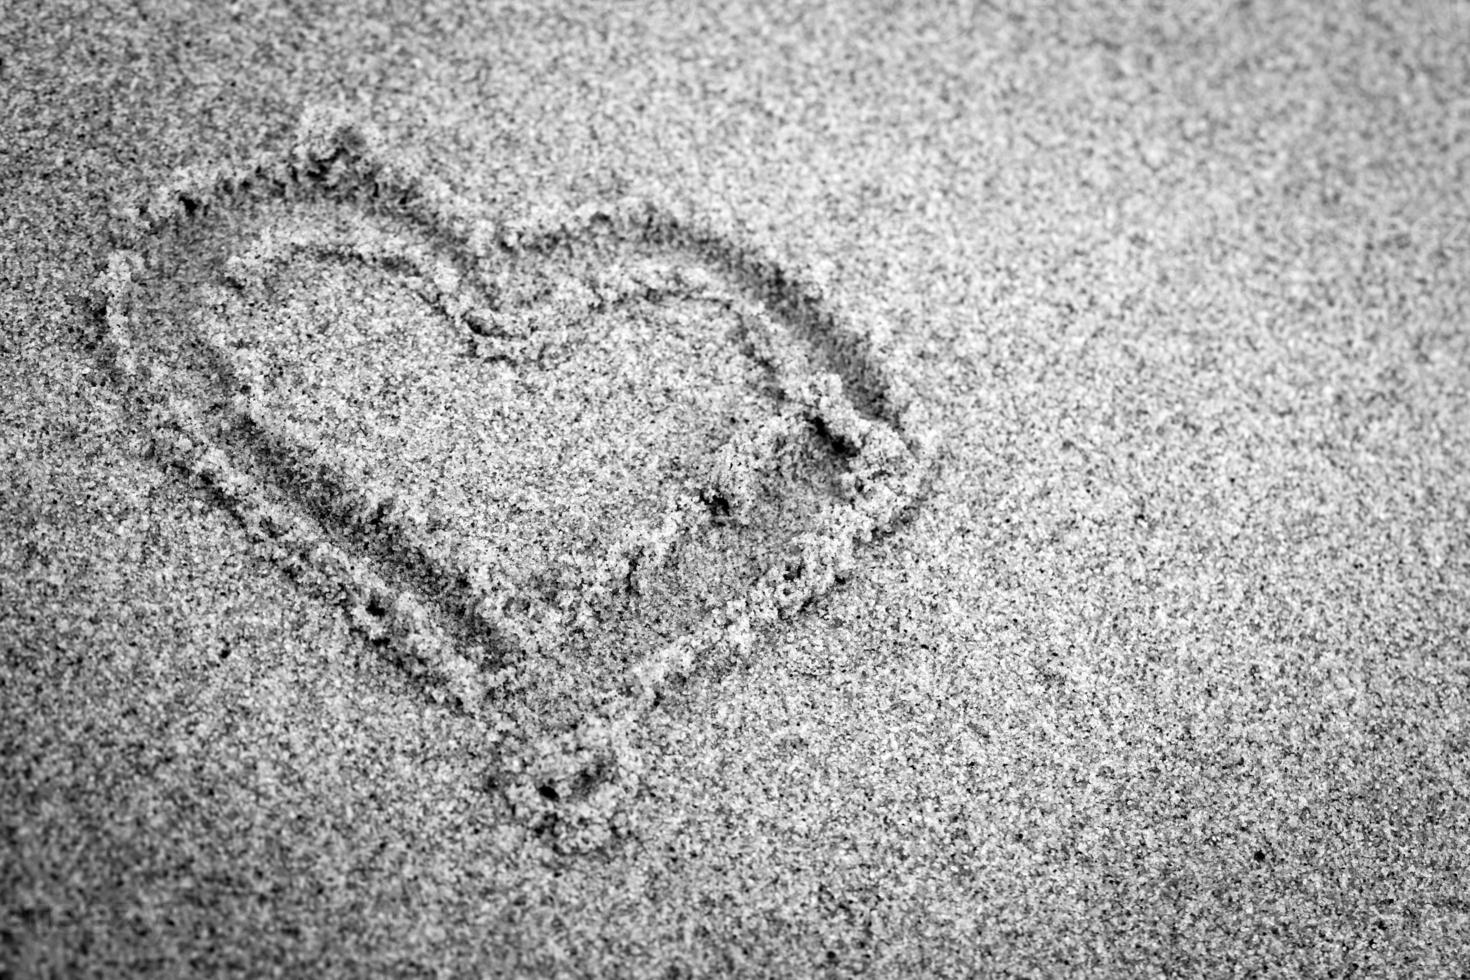 Heart shape on sand. Romantic, black and white photo